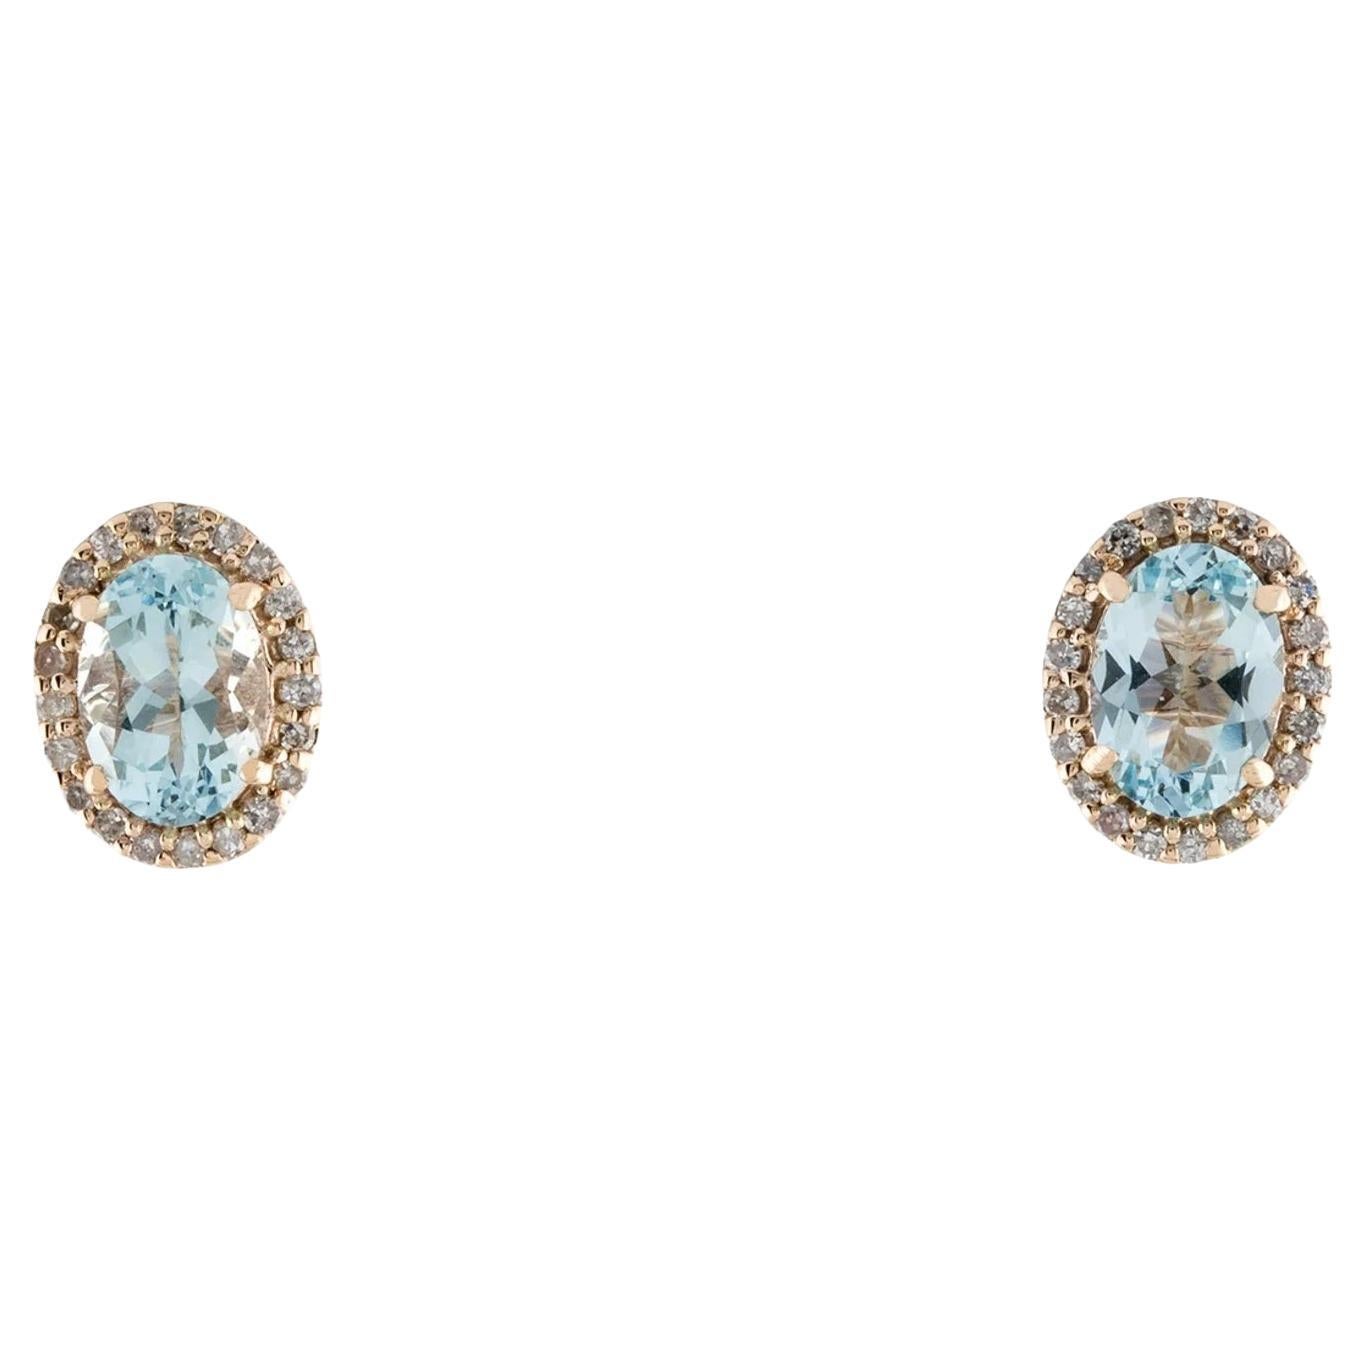 Designer 14K Yellow Gold Aquamarine & Diamond Stud Earrings, Oval Cut